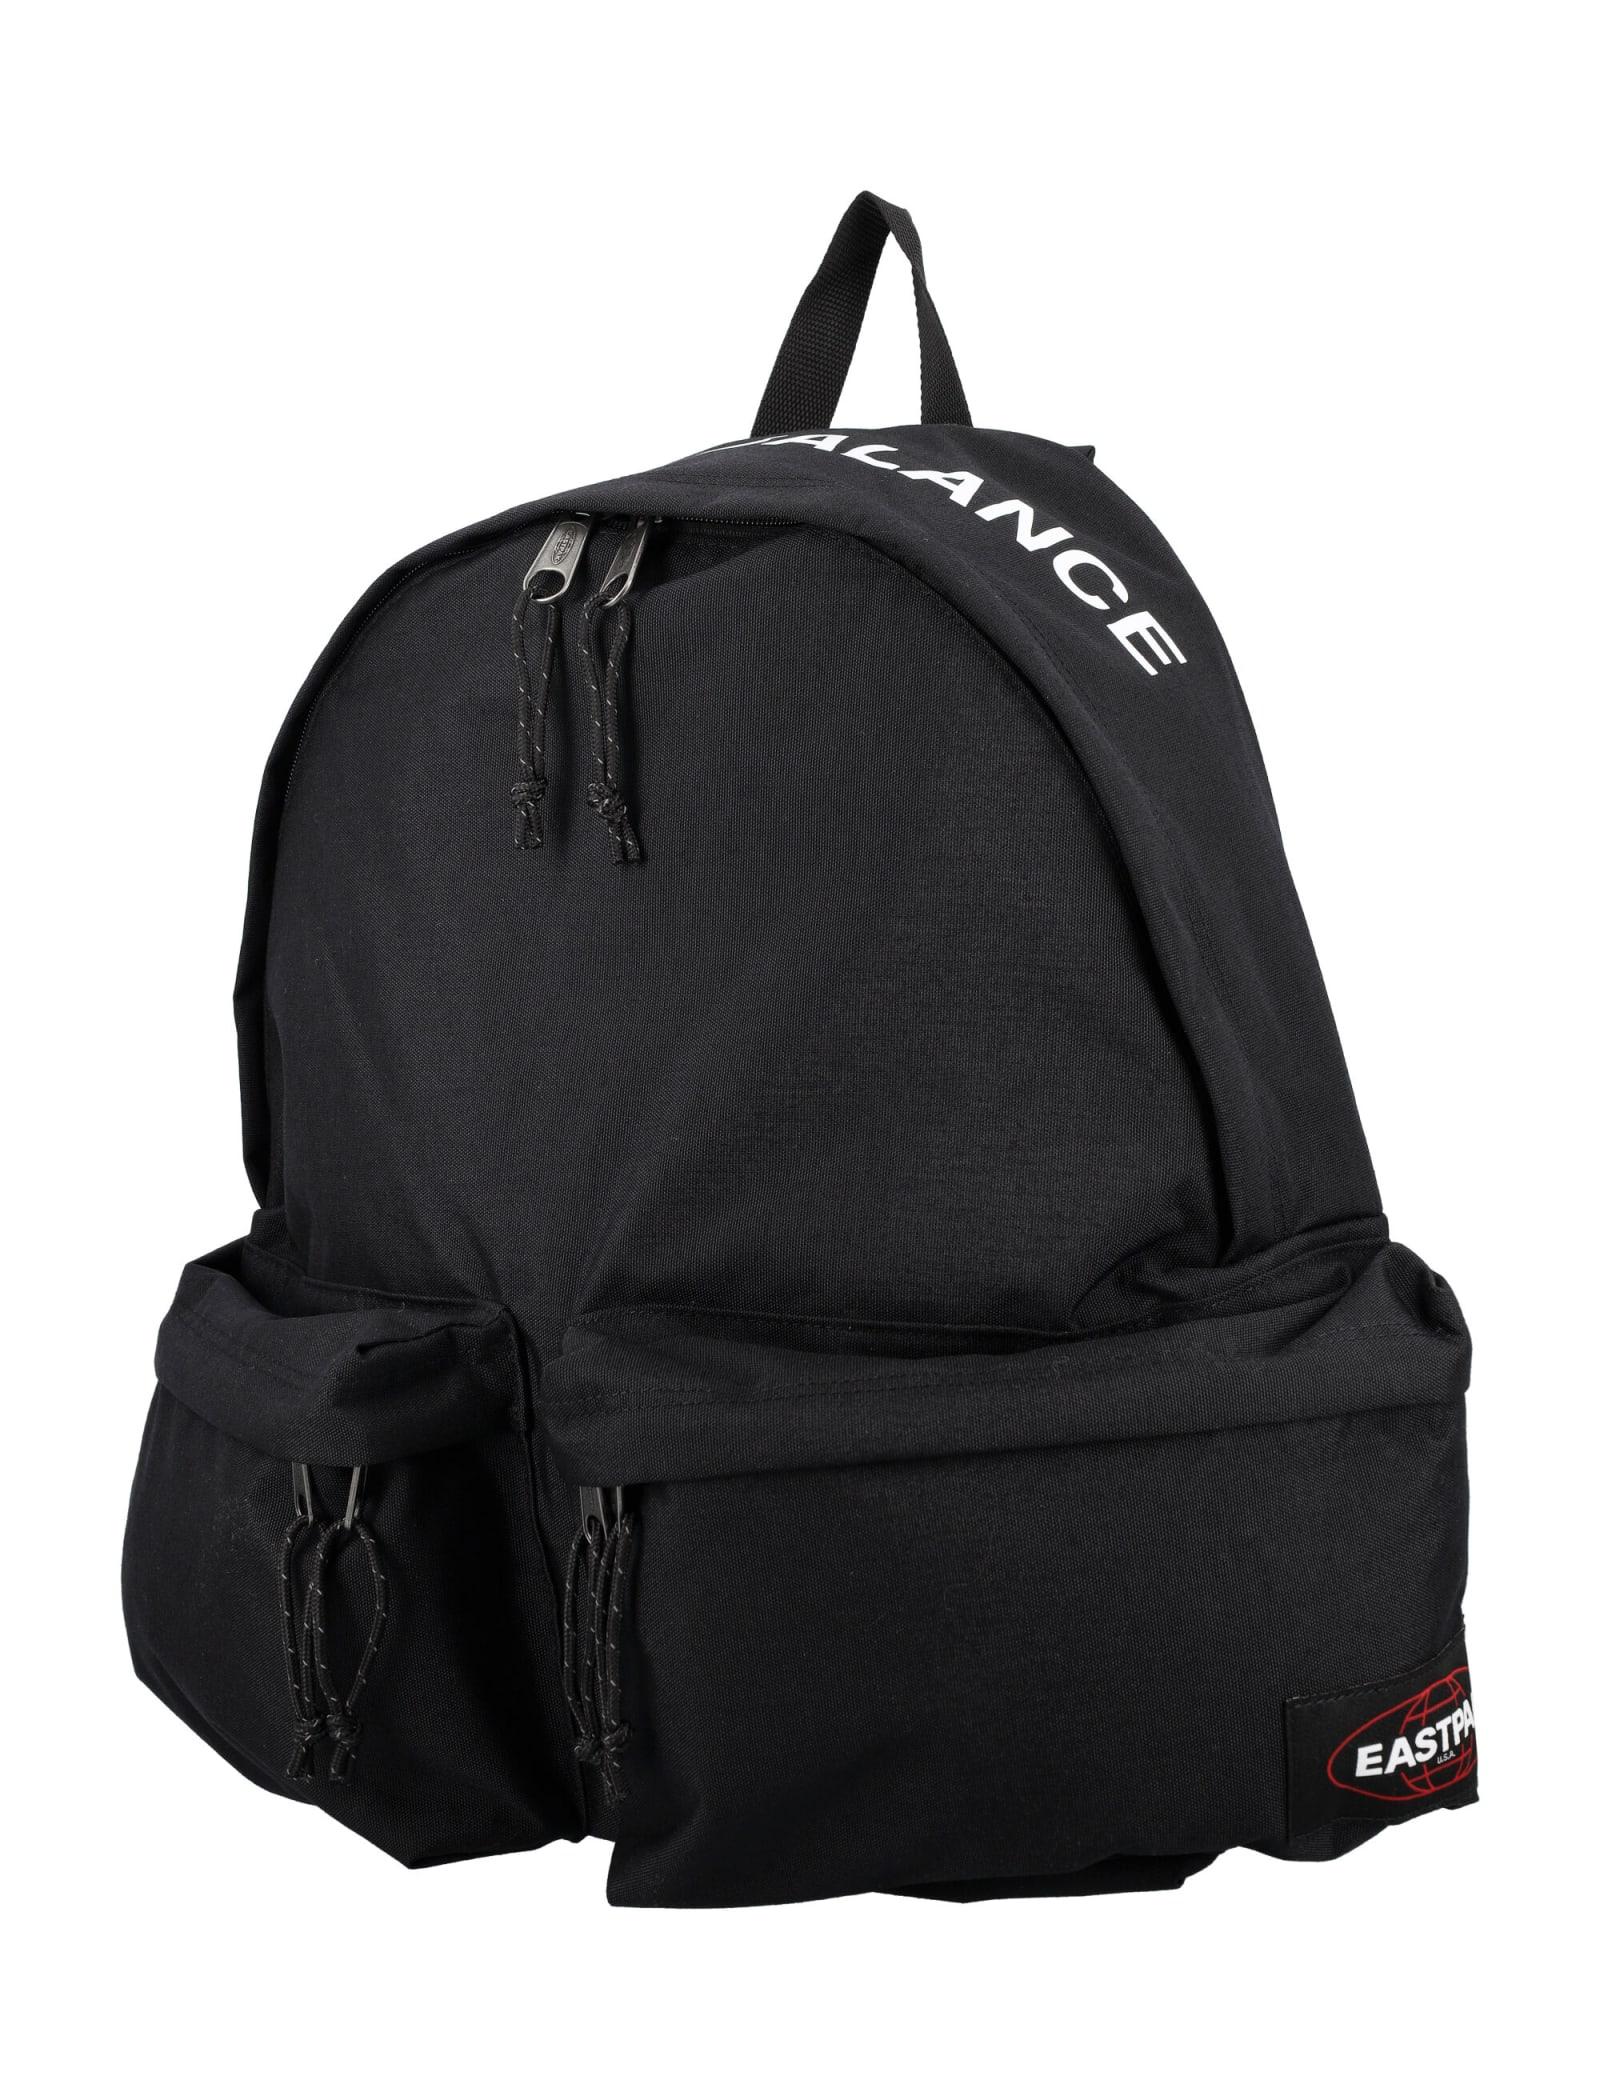 Eastpak Undercover Double Pocket Backpack in Black | Lyst